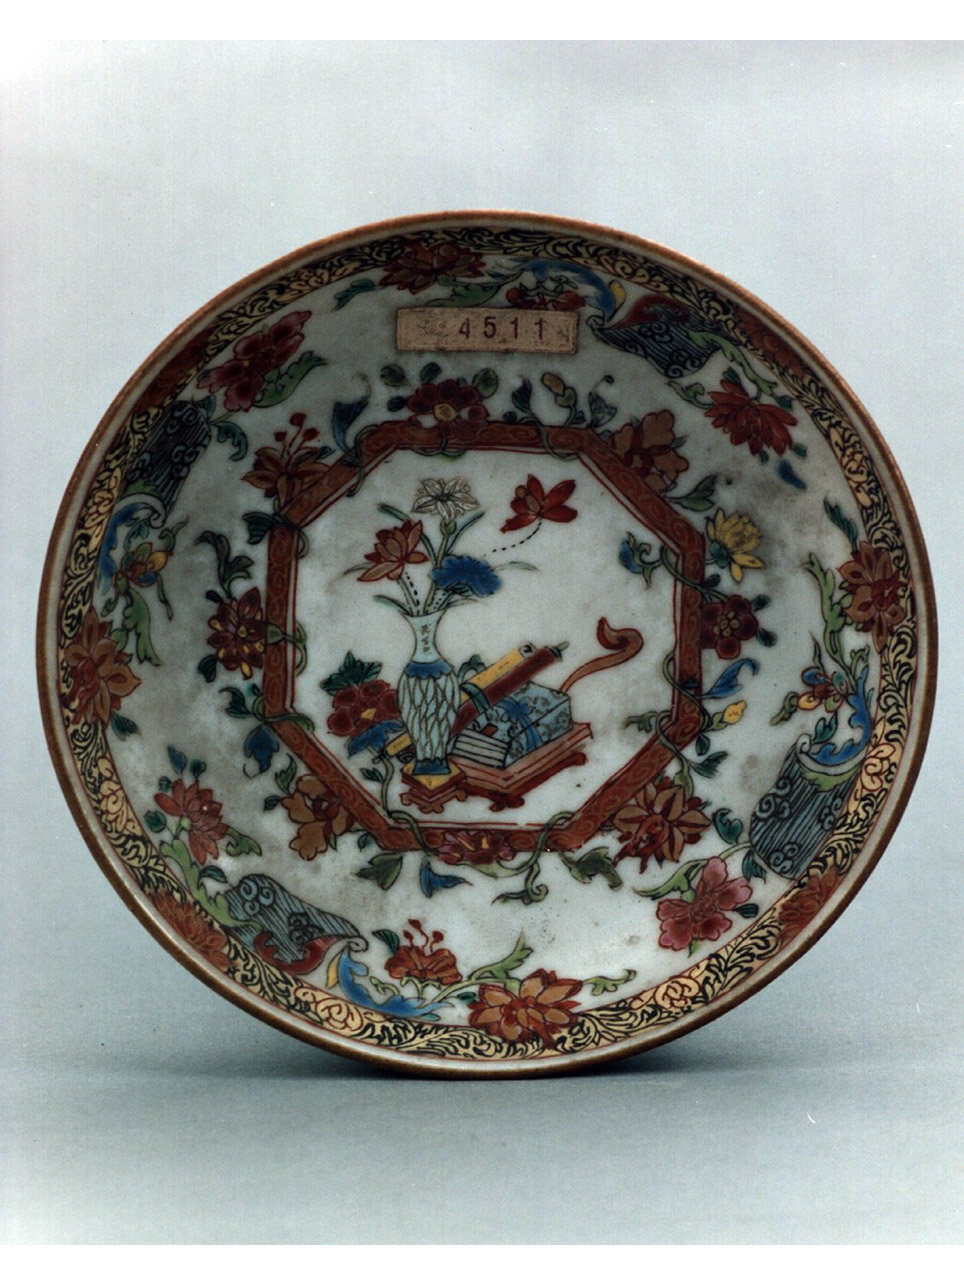 motivi decorativi floreali (piattino) - manifattura cinese (secondo quarto sec. XVIII)